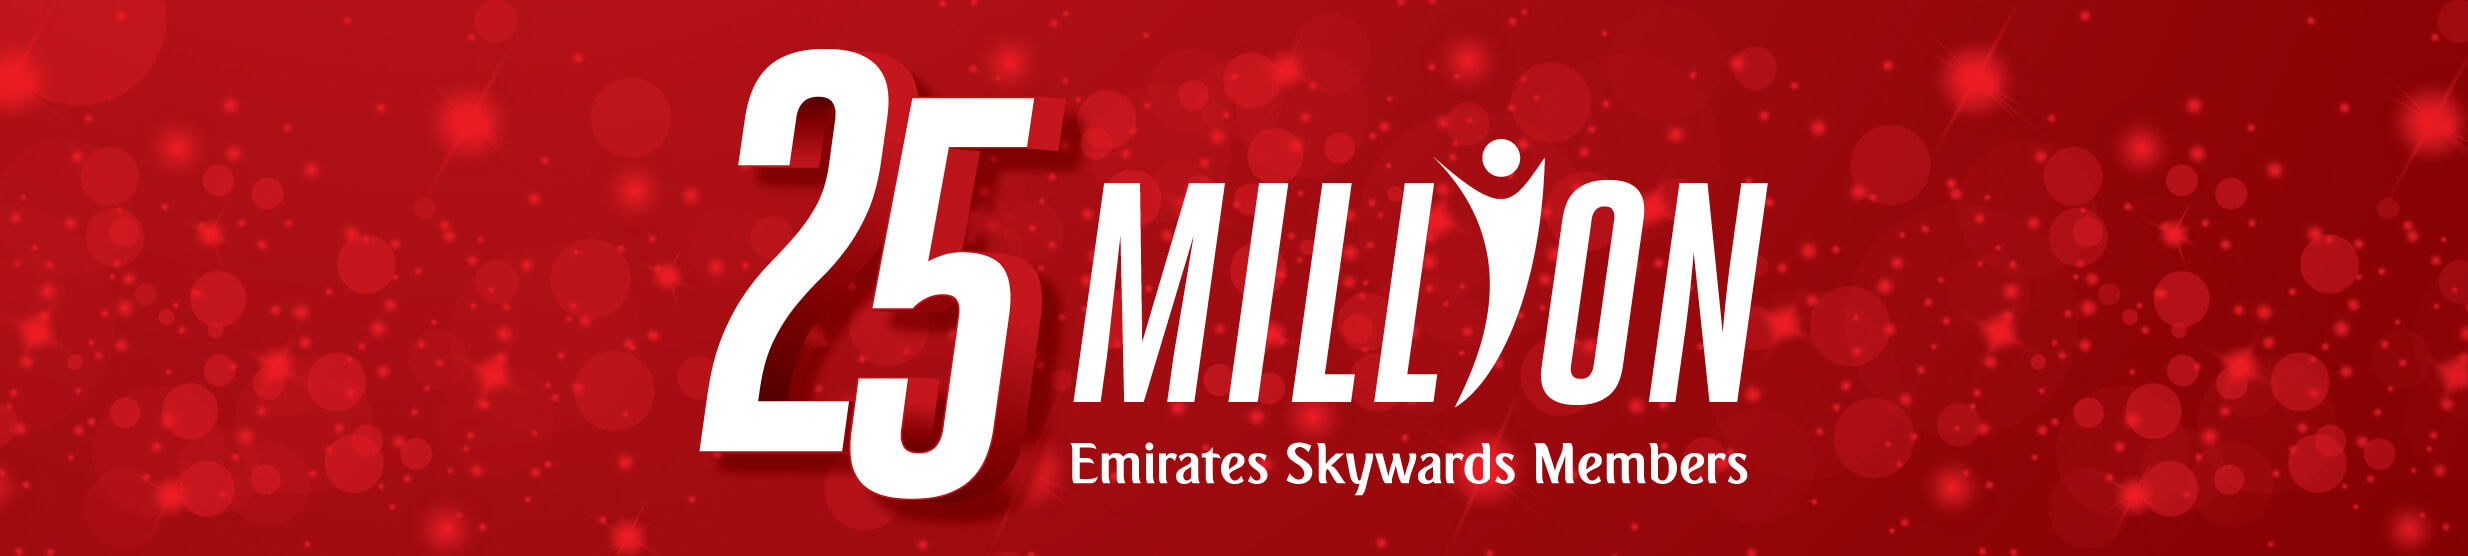 Skywards crosses 25 million member milestone